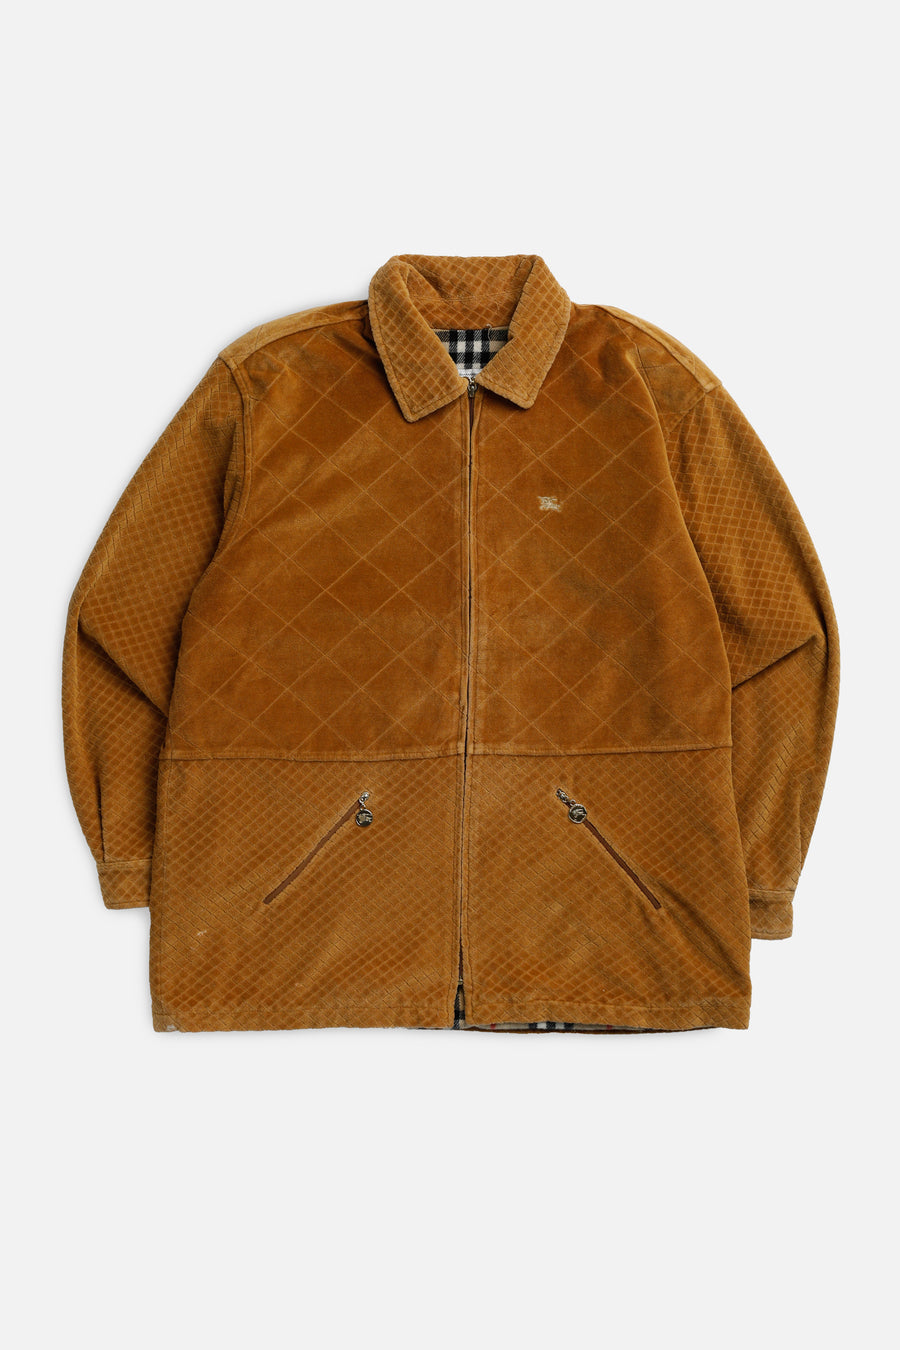 Vintage Burberry Jacket - L